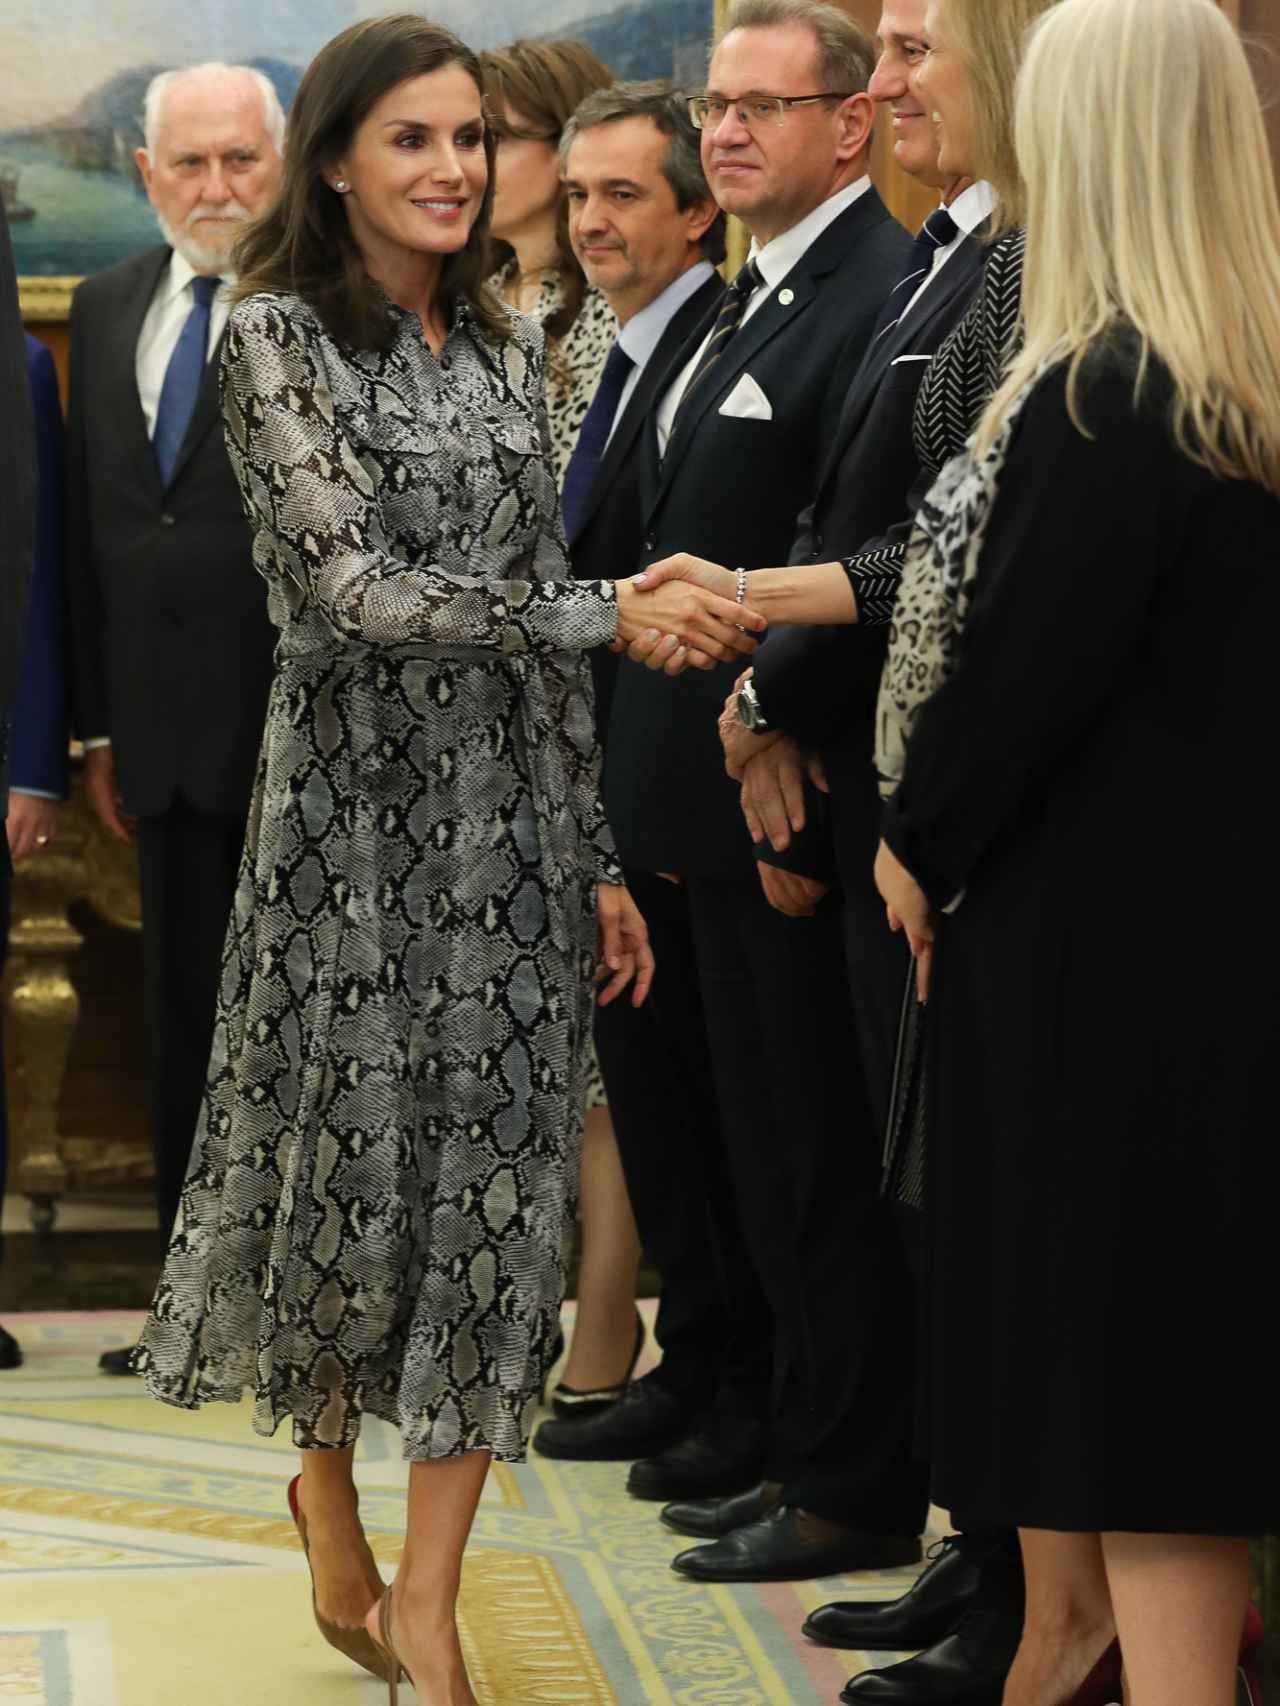 La reina Letizia con vestido estampado de 'animal print'.